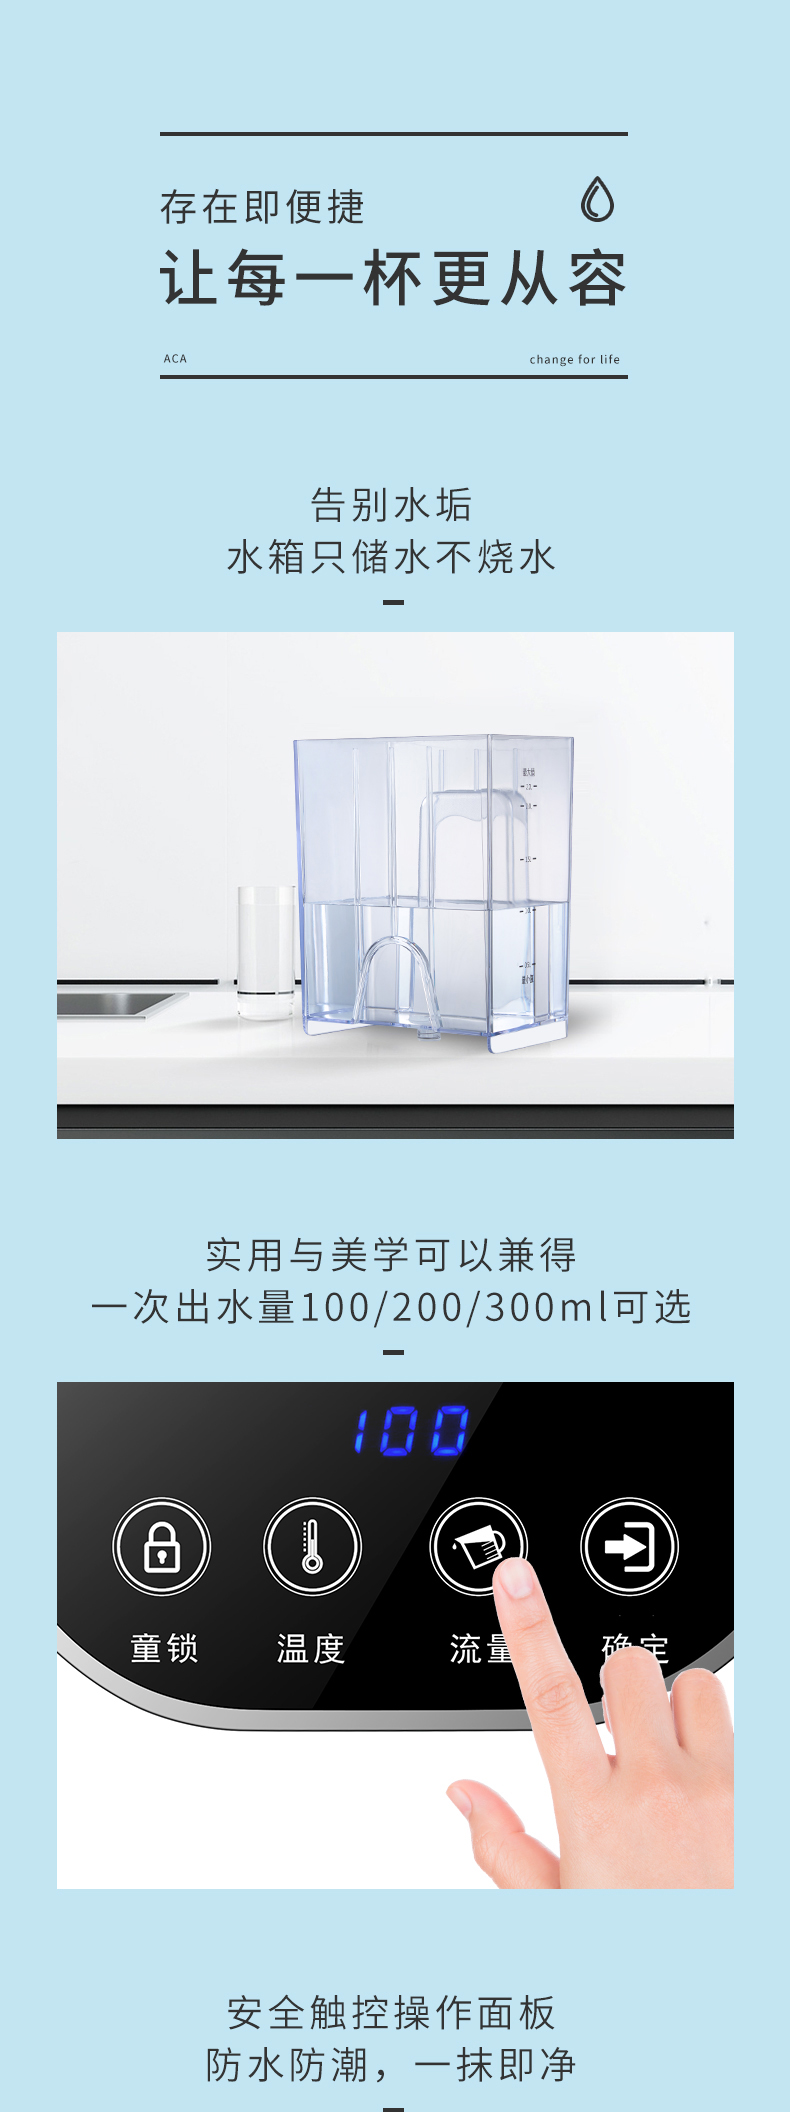 ACA 电热水壶 速热迷你型 即热式 6段温控 家用台式饮水机AK-IH203